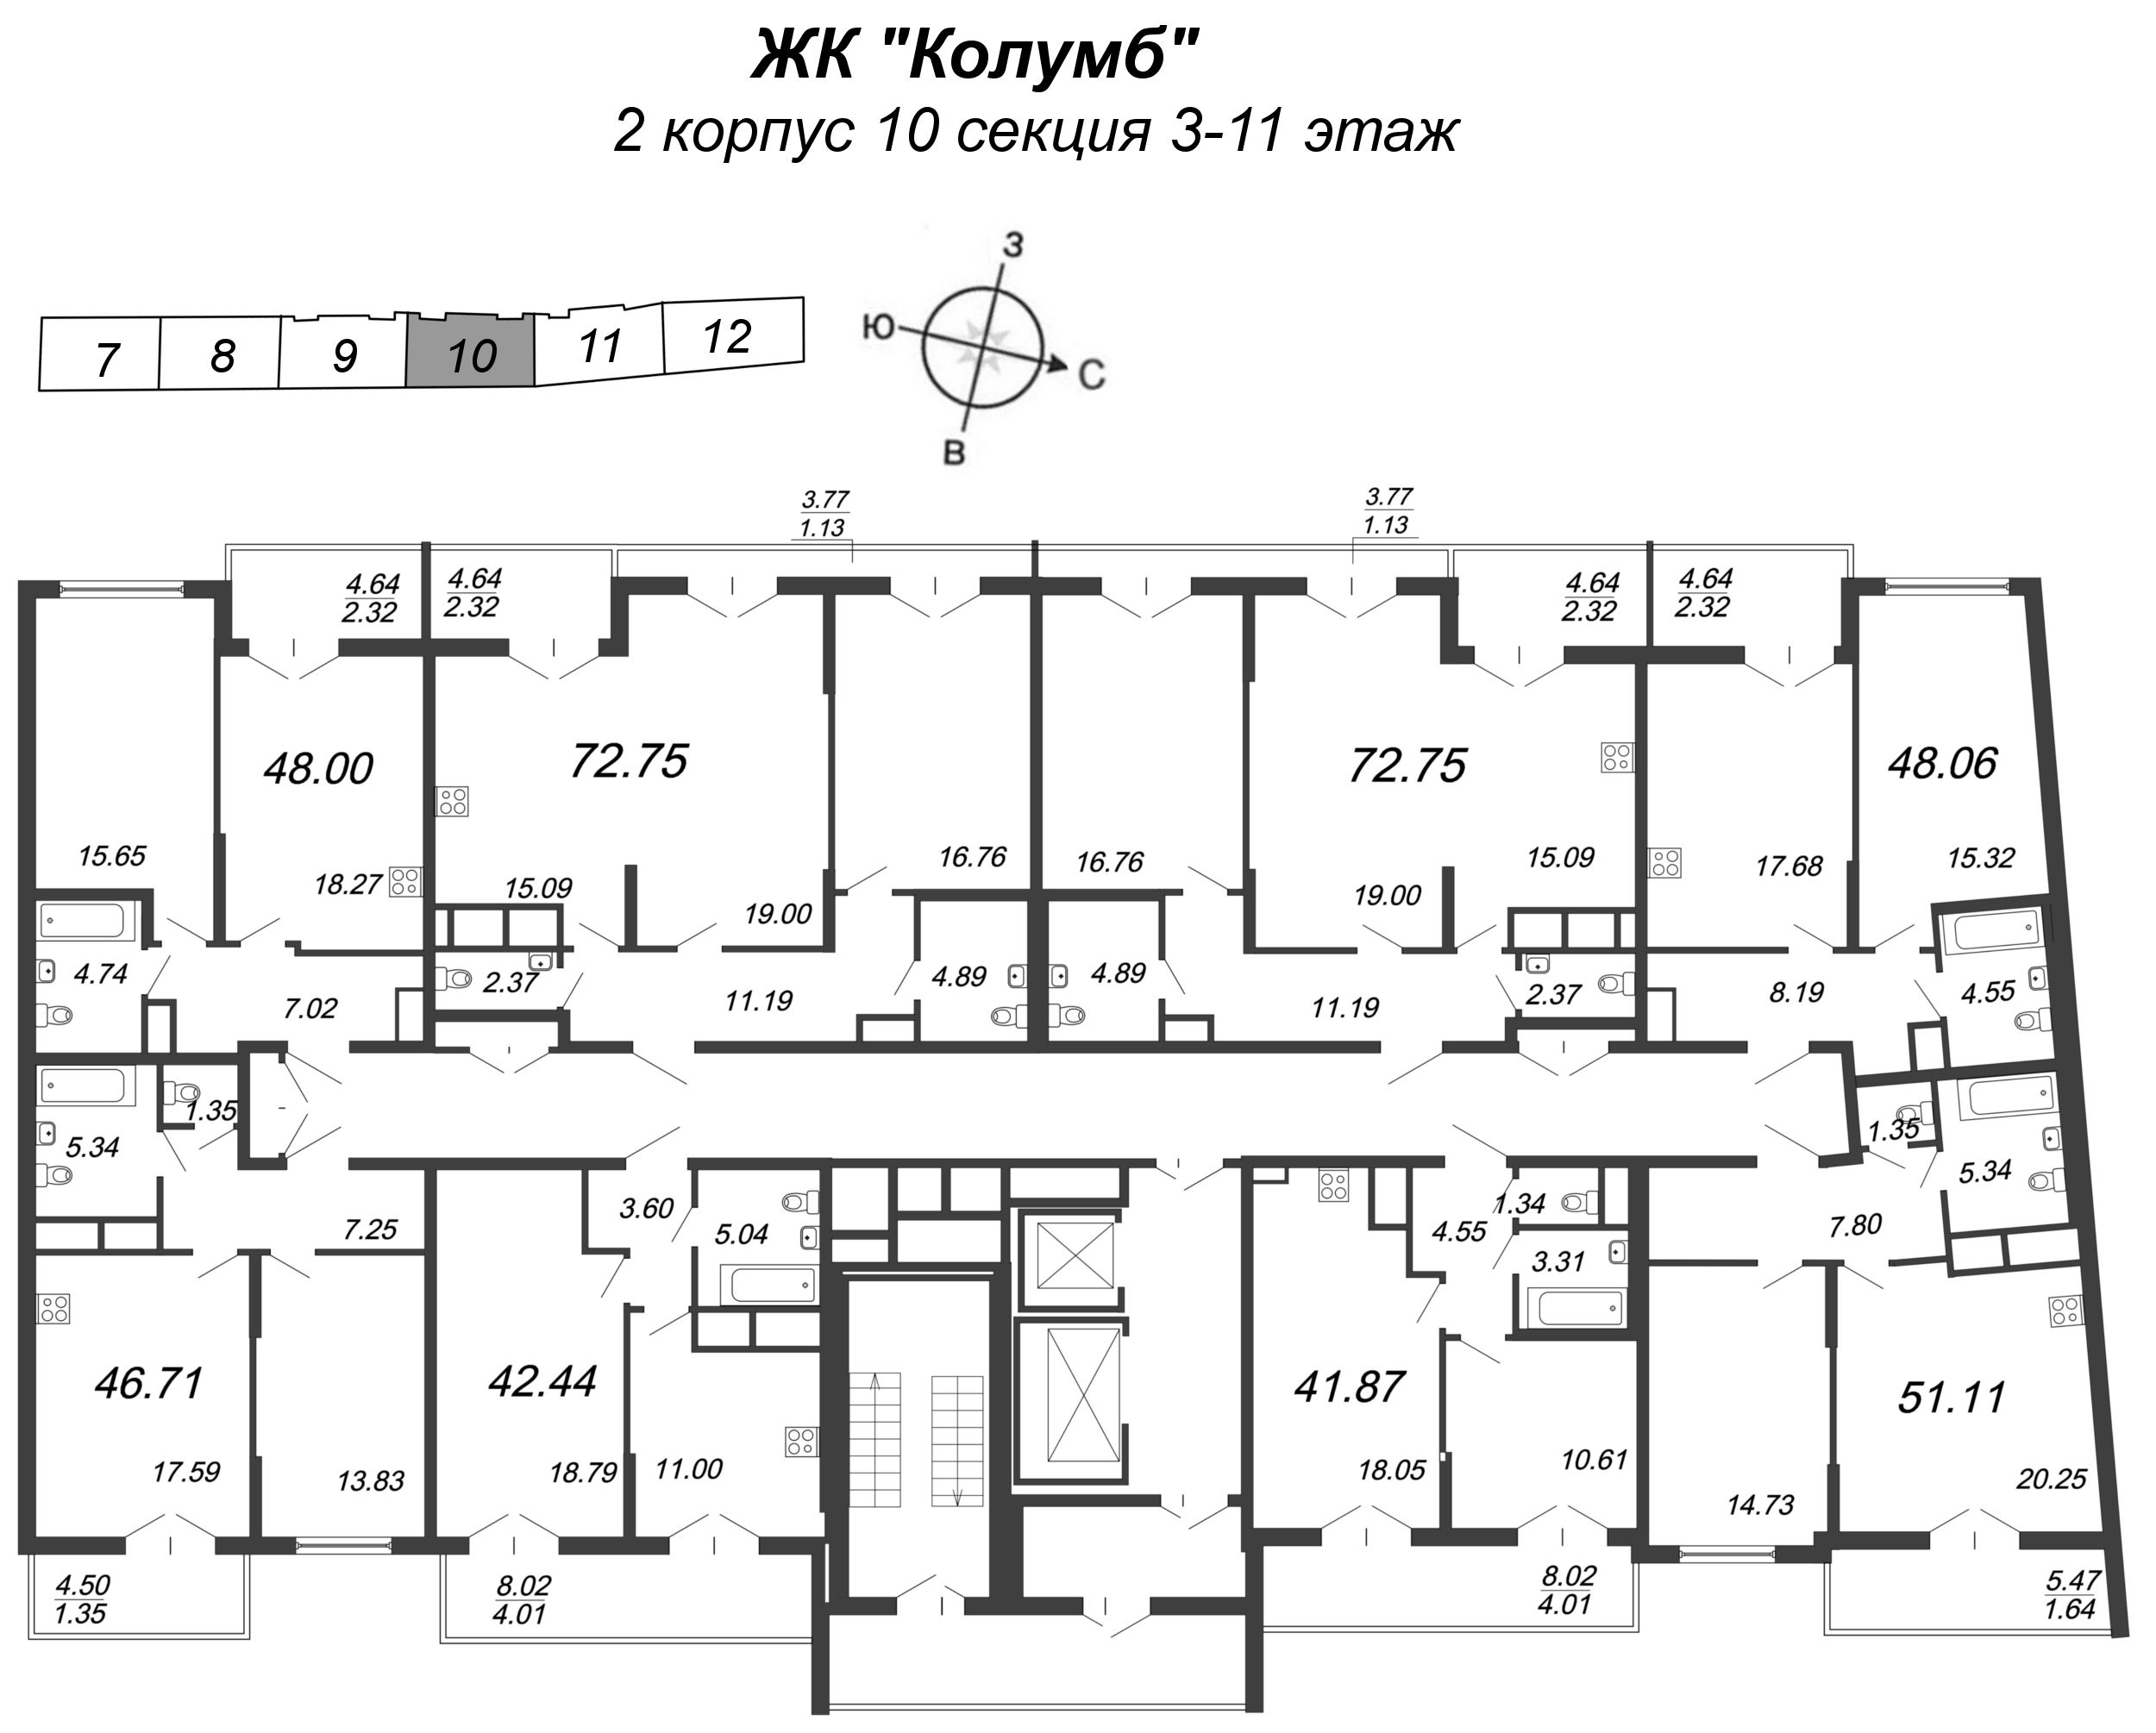 2-комнатная квартира, 72.2 м² в ЖК "Колумб" - планировка этажа